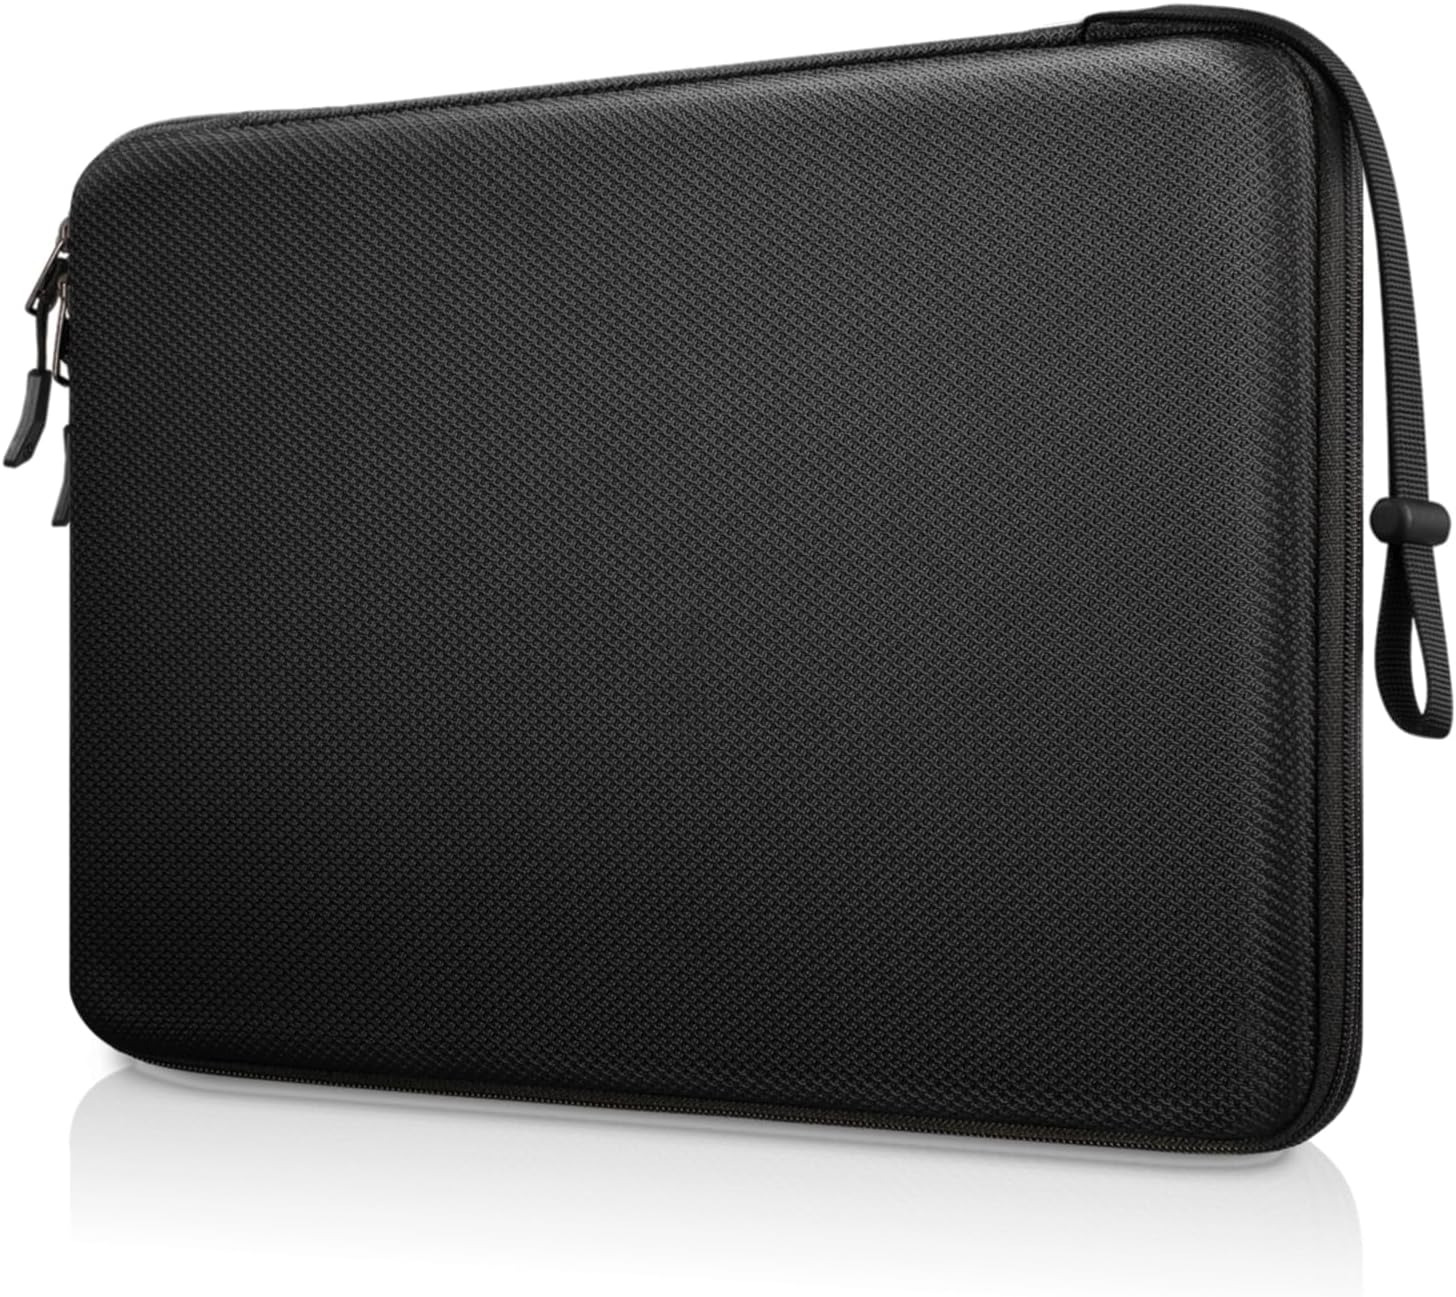 Hard Laptop Sleeve Case for 16-inch MacBook Shockproof Computer Carrying Bag